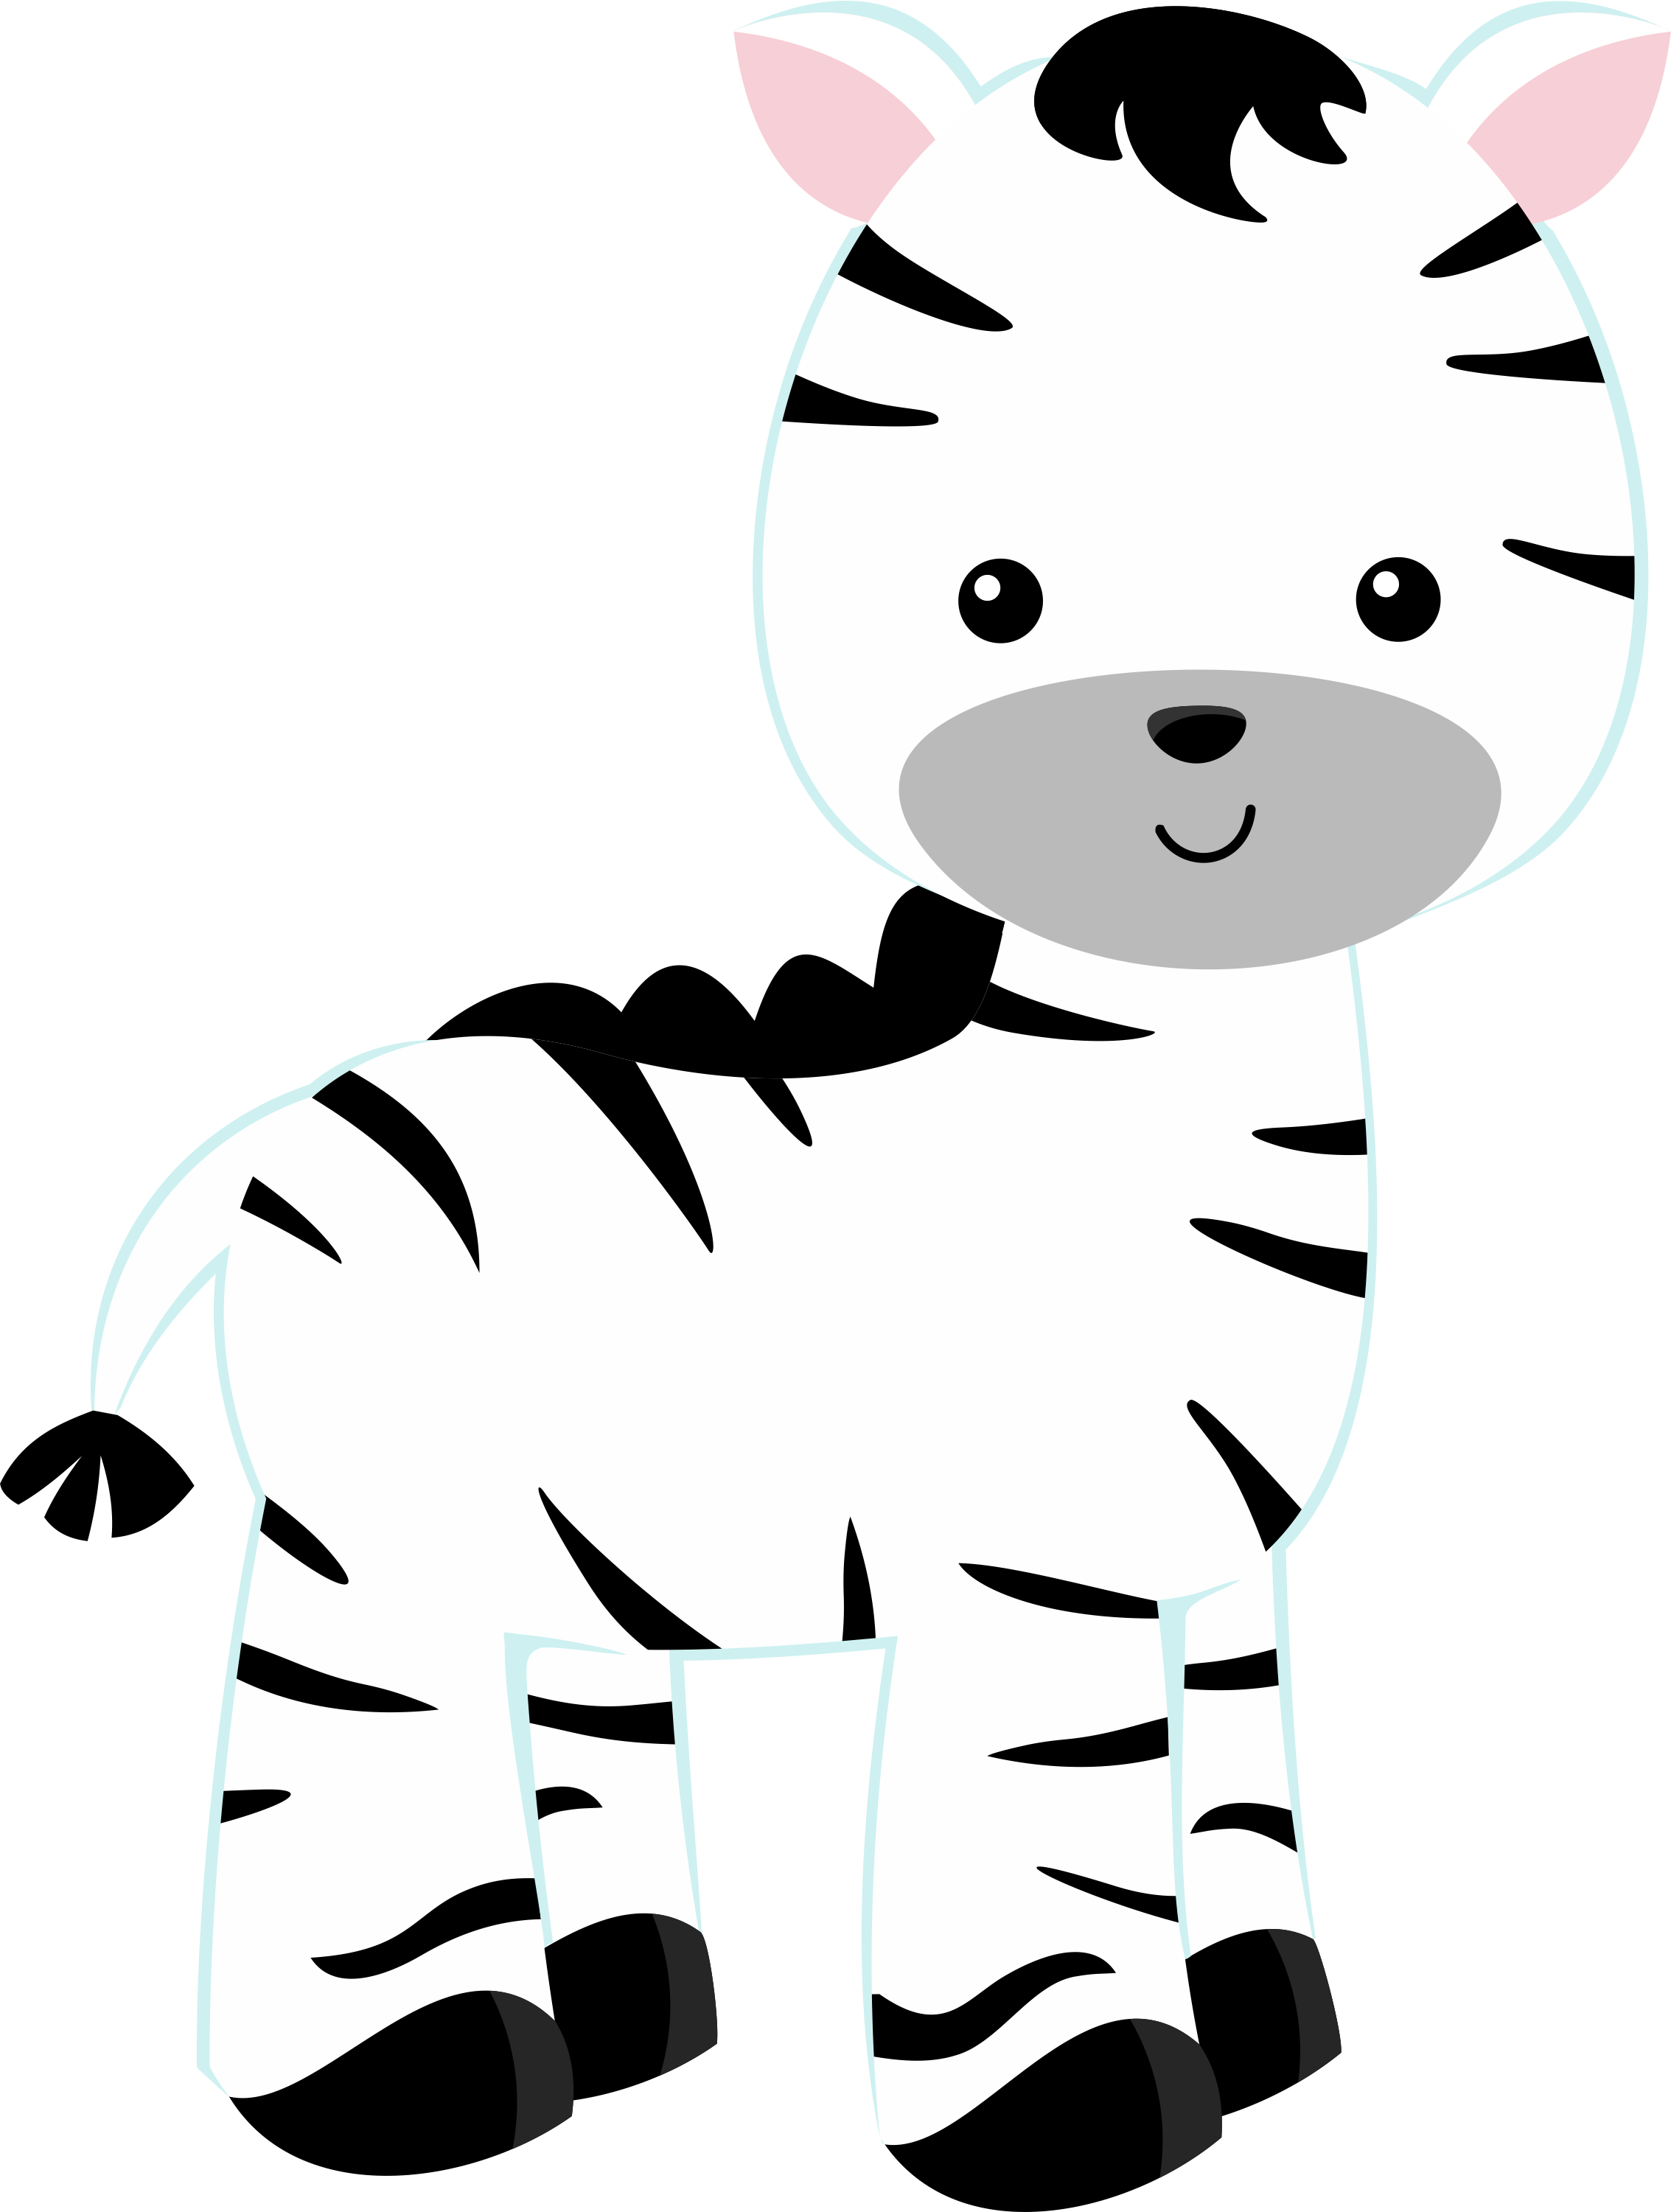 A Cartoon Of A Zebra